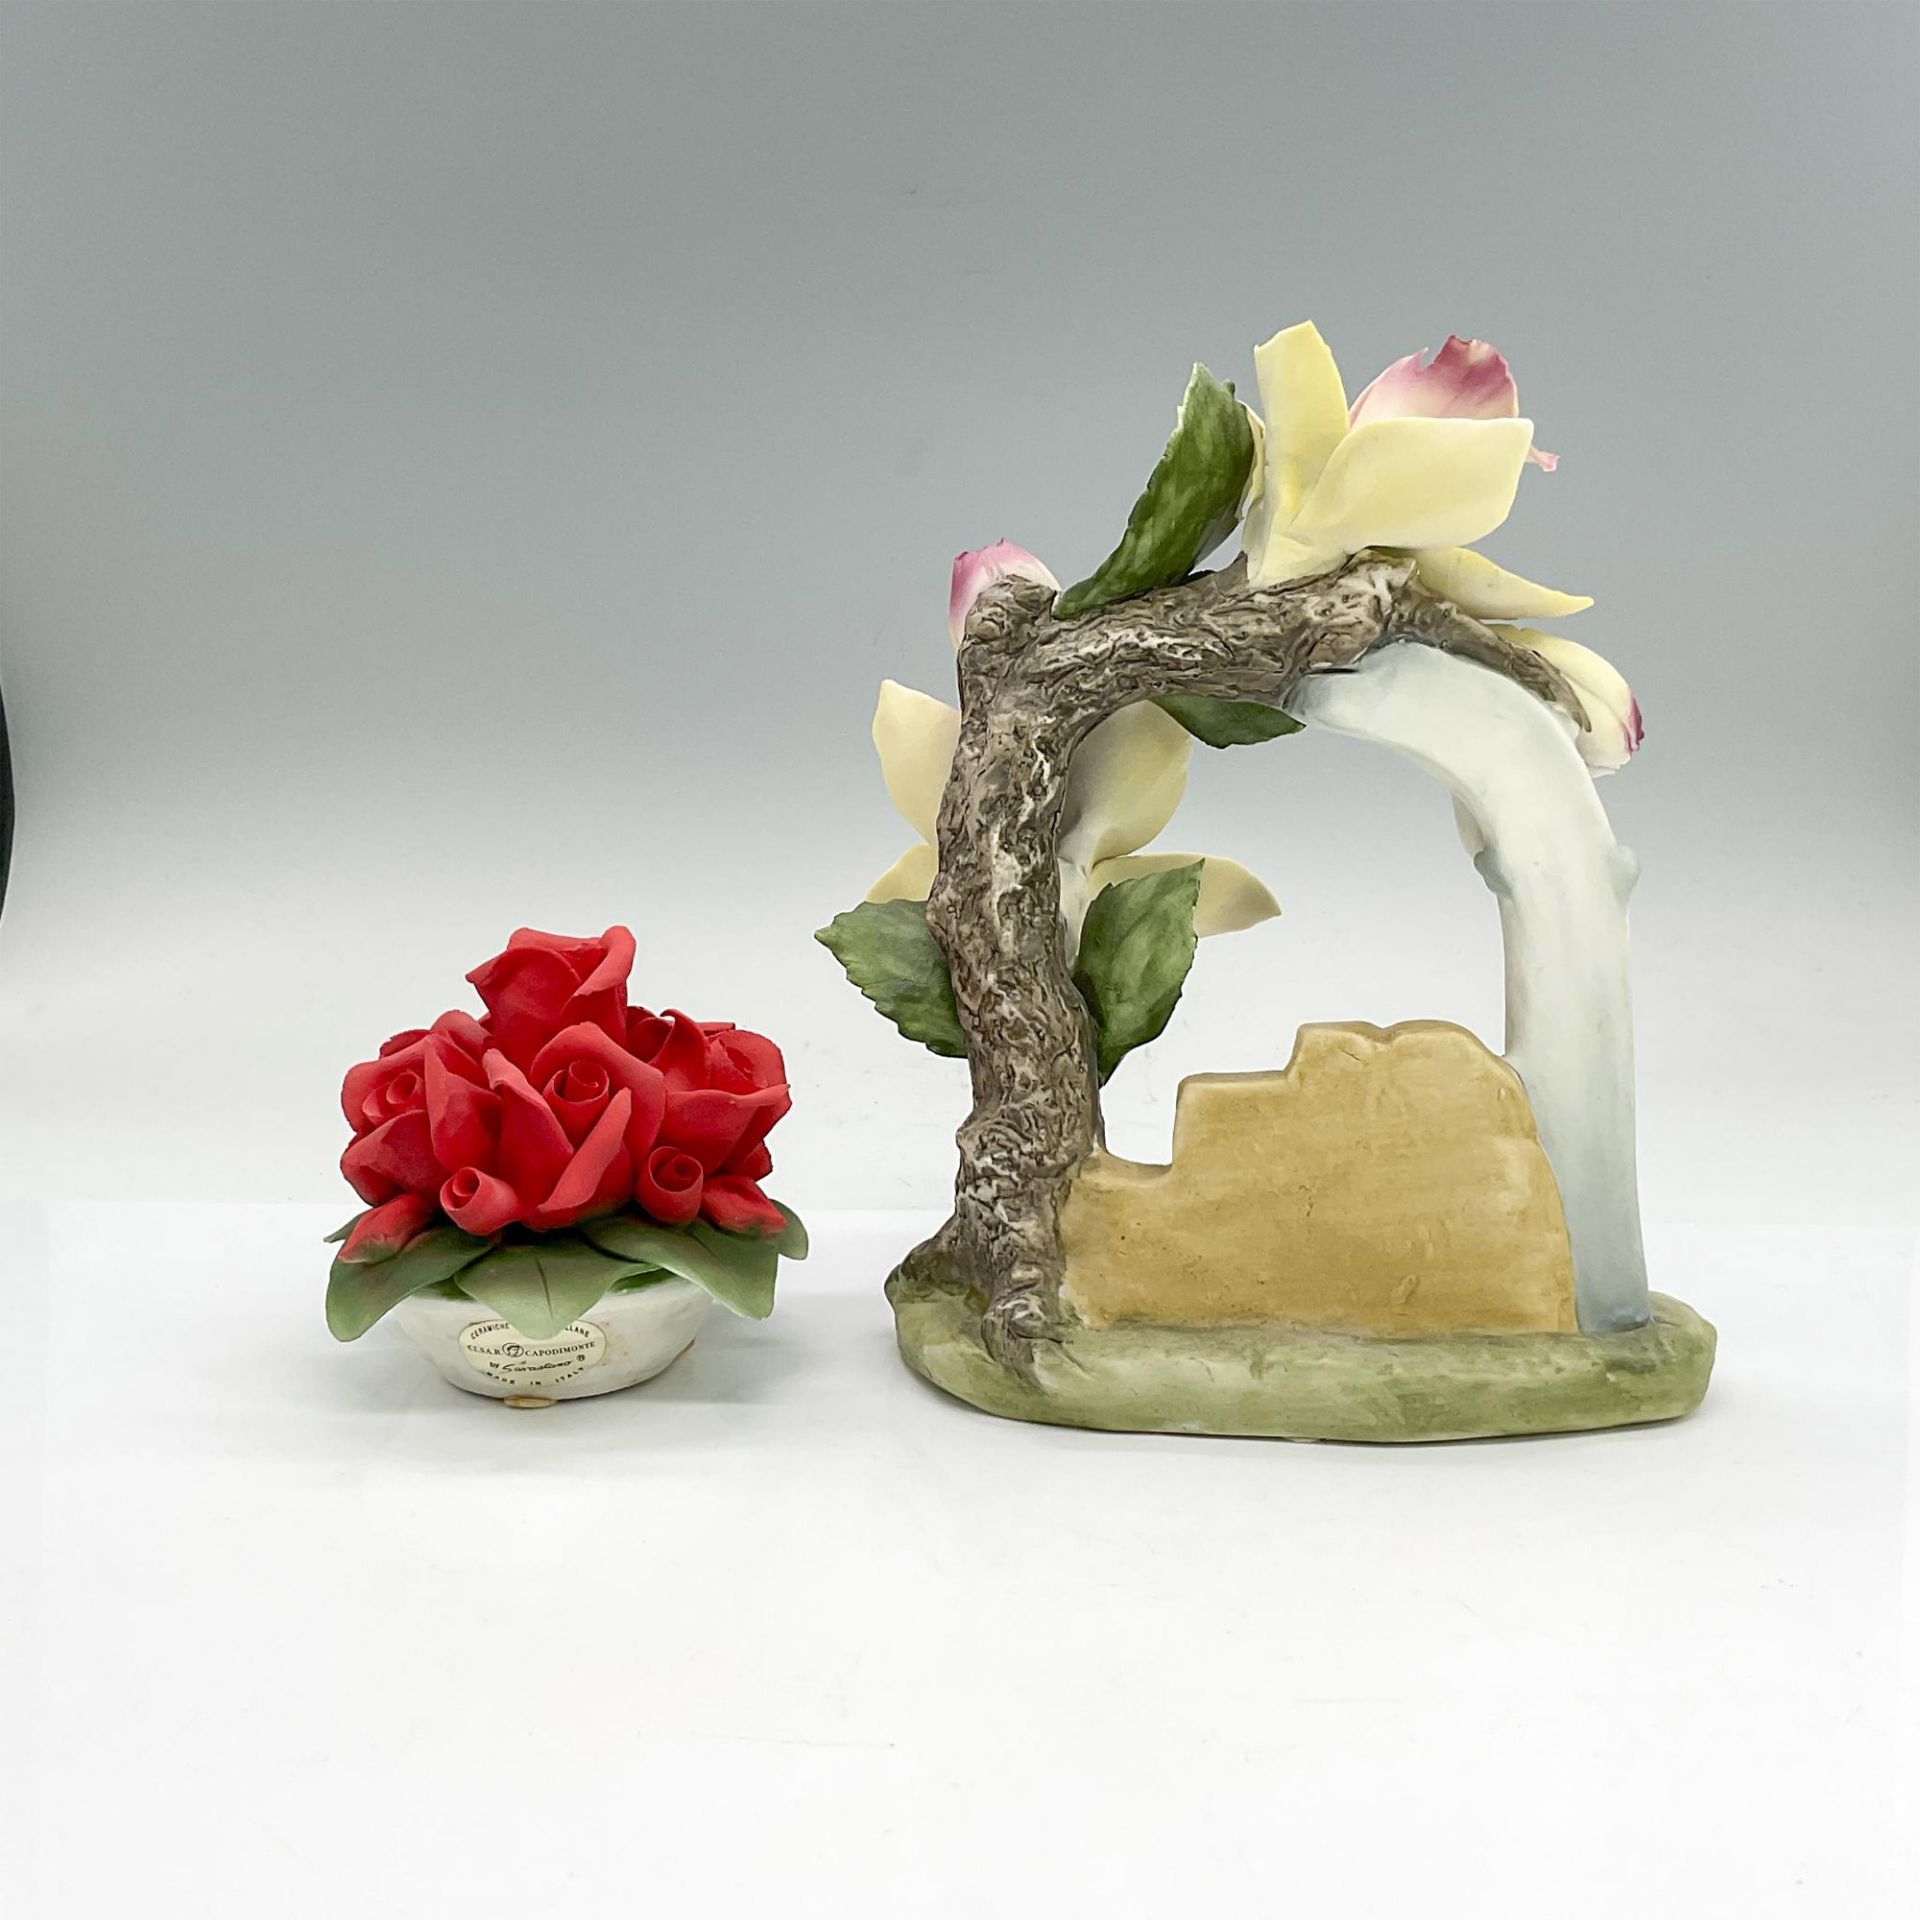 2pc Capodimonte Porcelain Figures, Roses + Dove w Orchids - Image 2 of 3